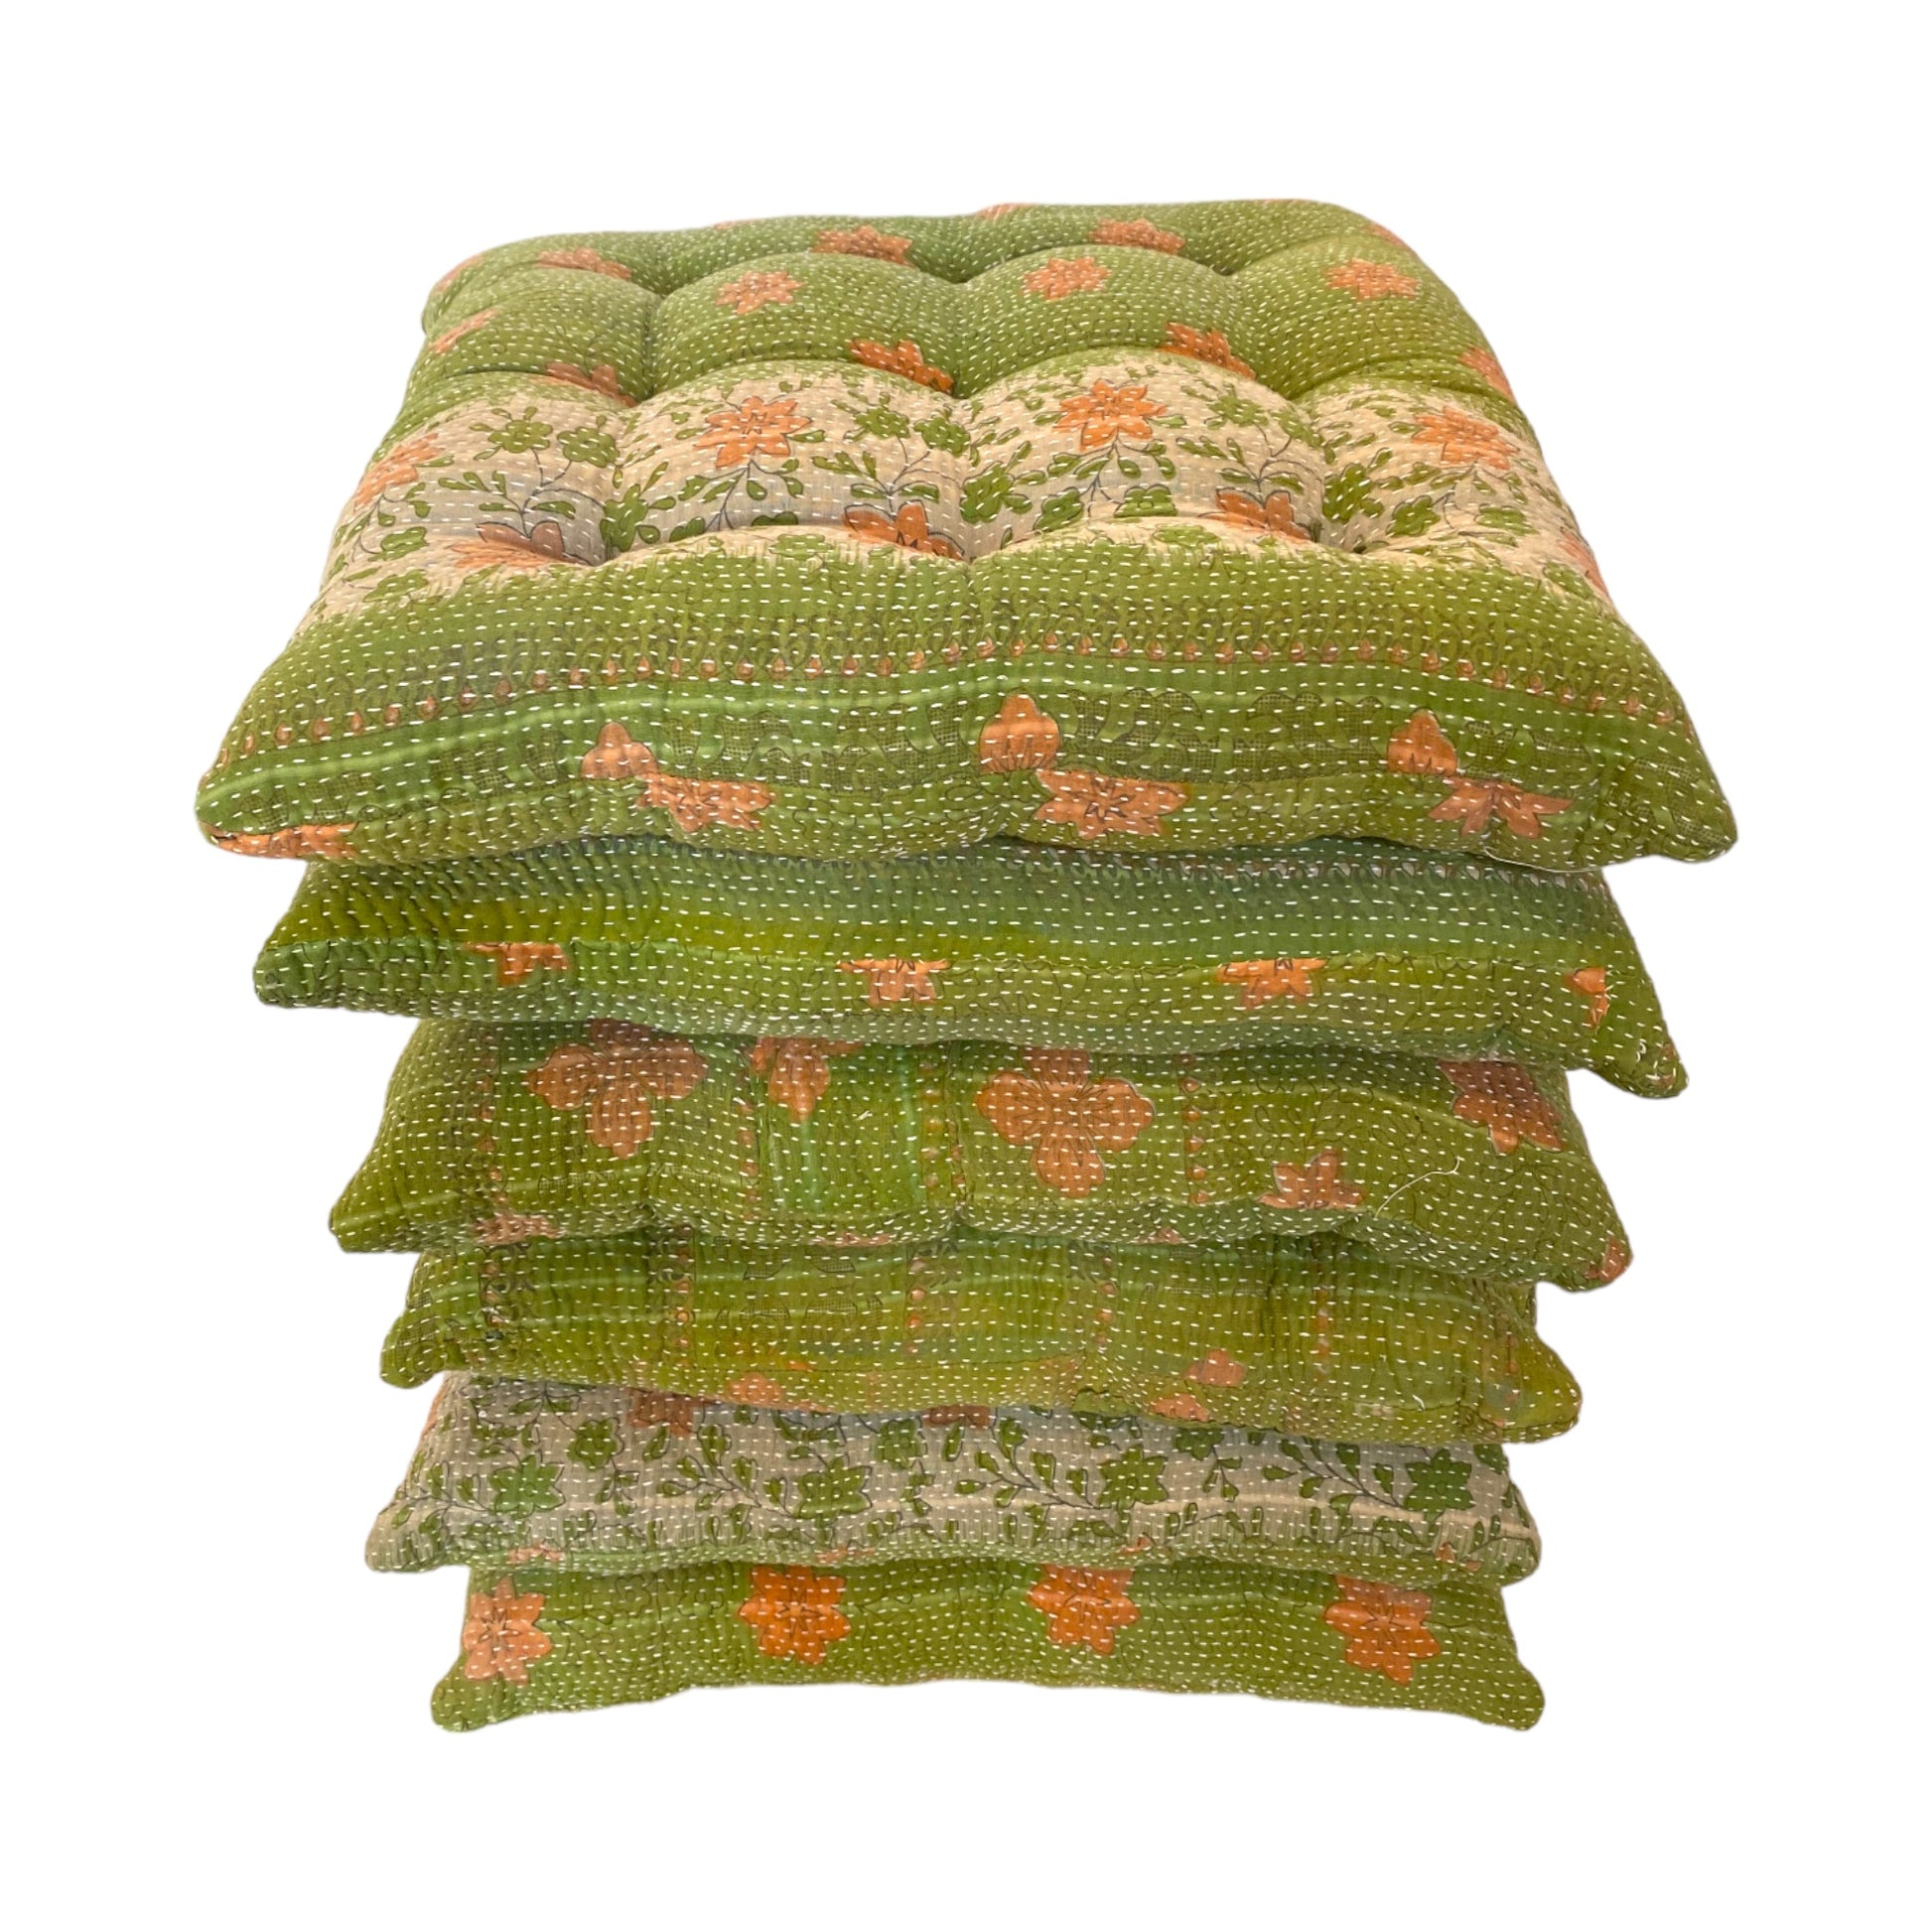 Lime green kantha seat cushions set